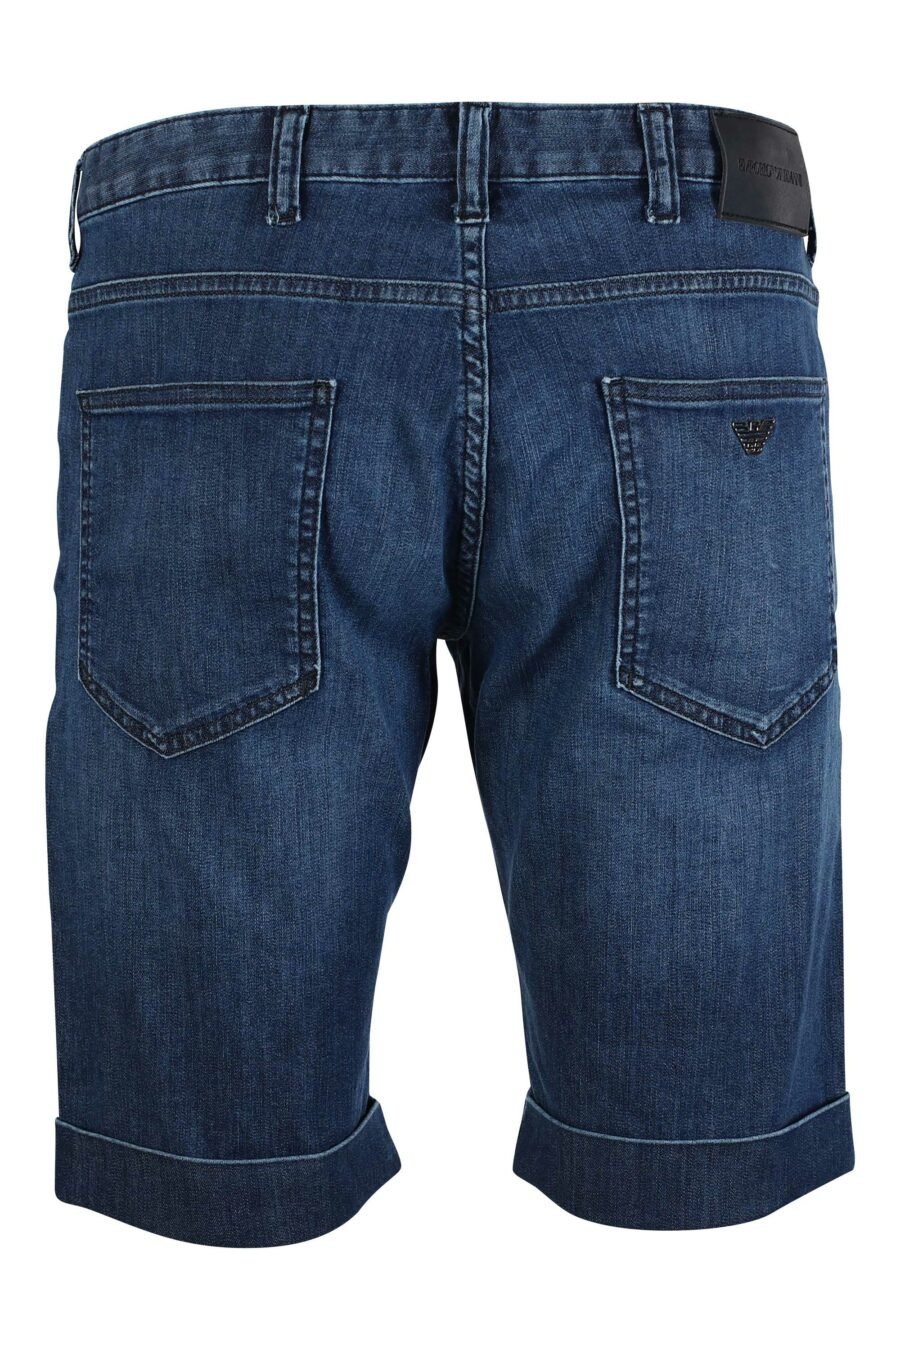 Blue denim shorts with metal mini logo - IMG 9495